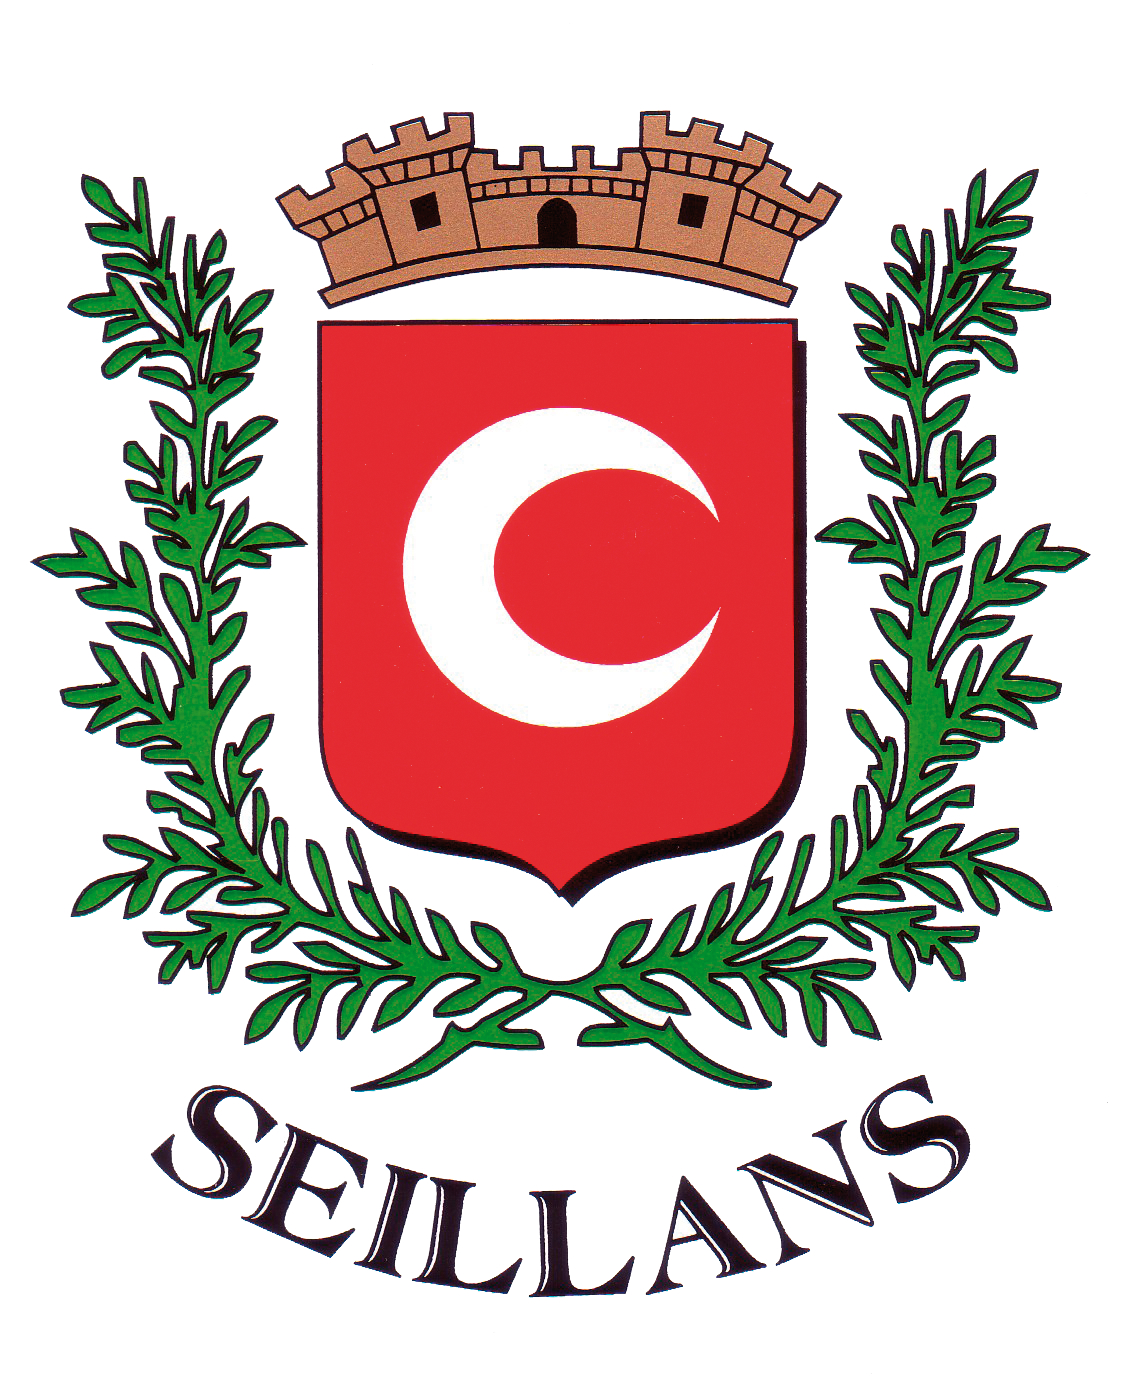 Seillans Festival